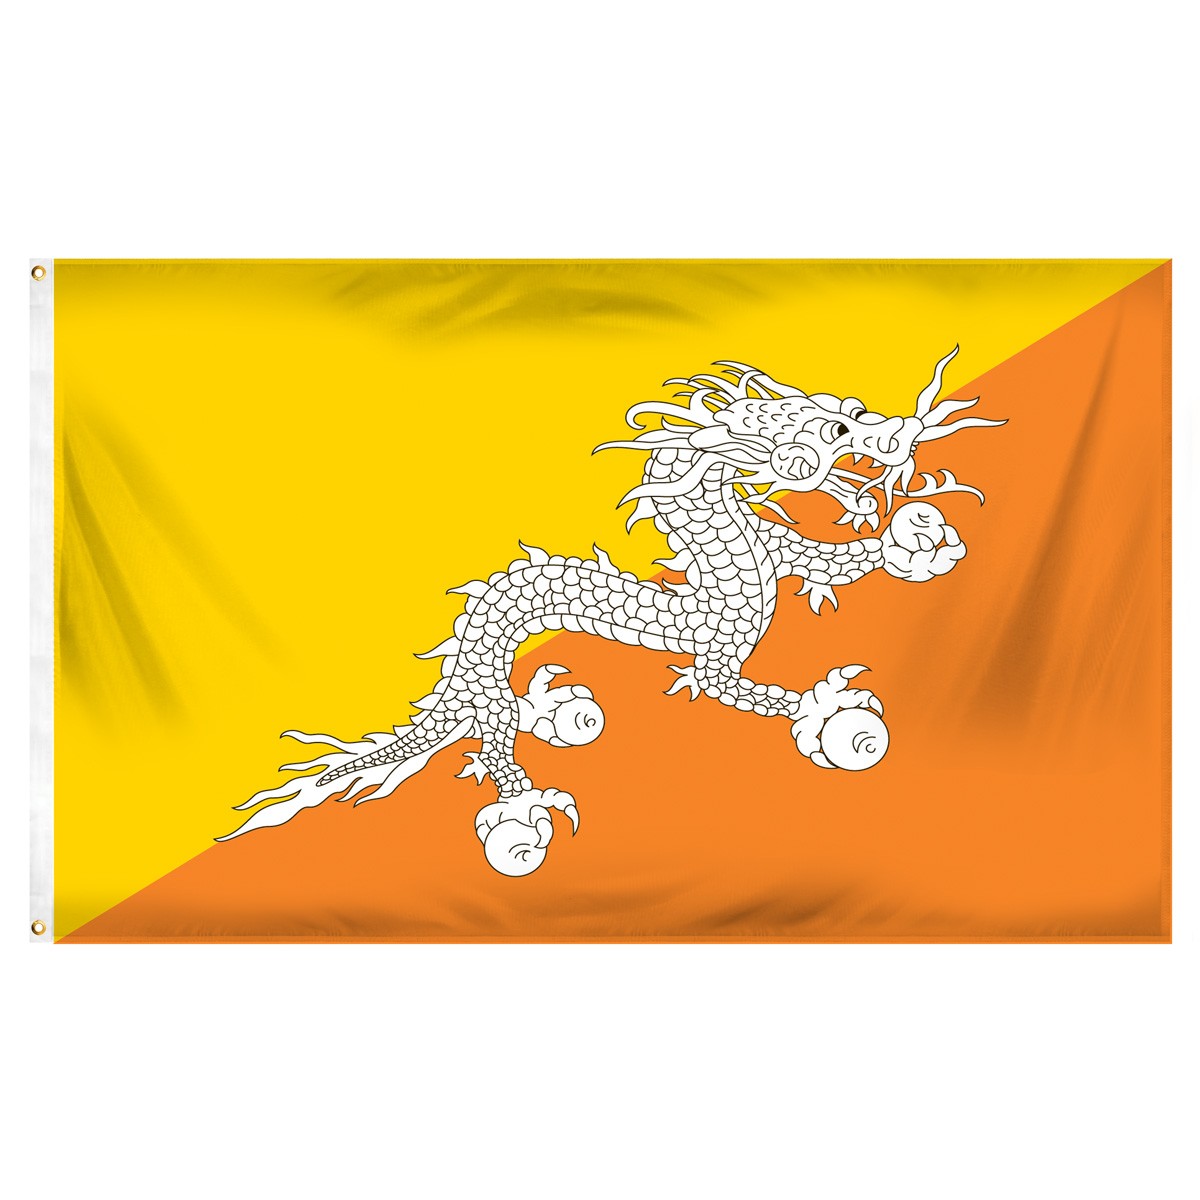 Bhutan Beach Flag and Sailing Flag